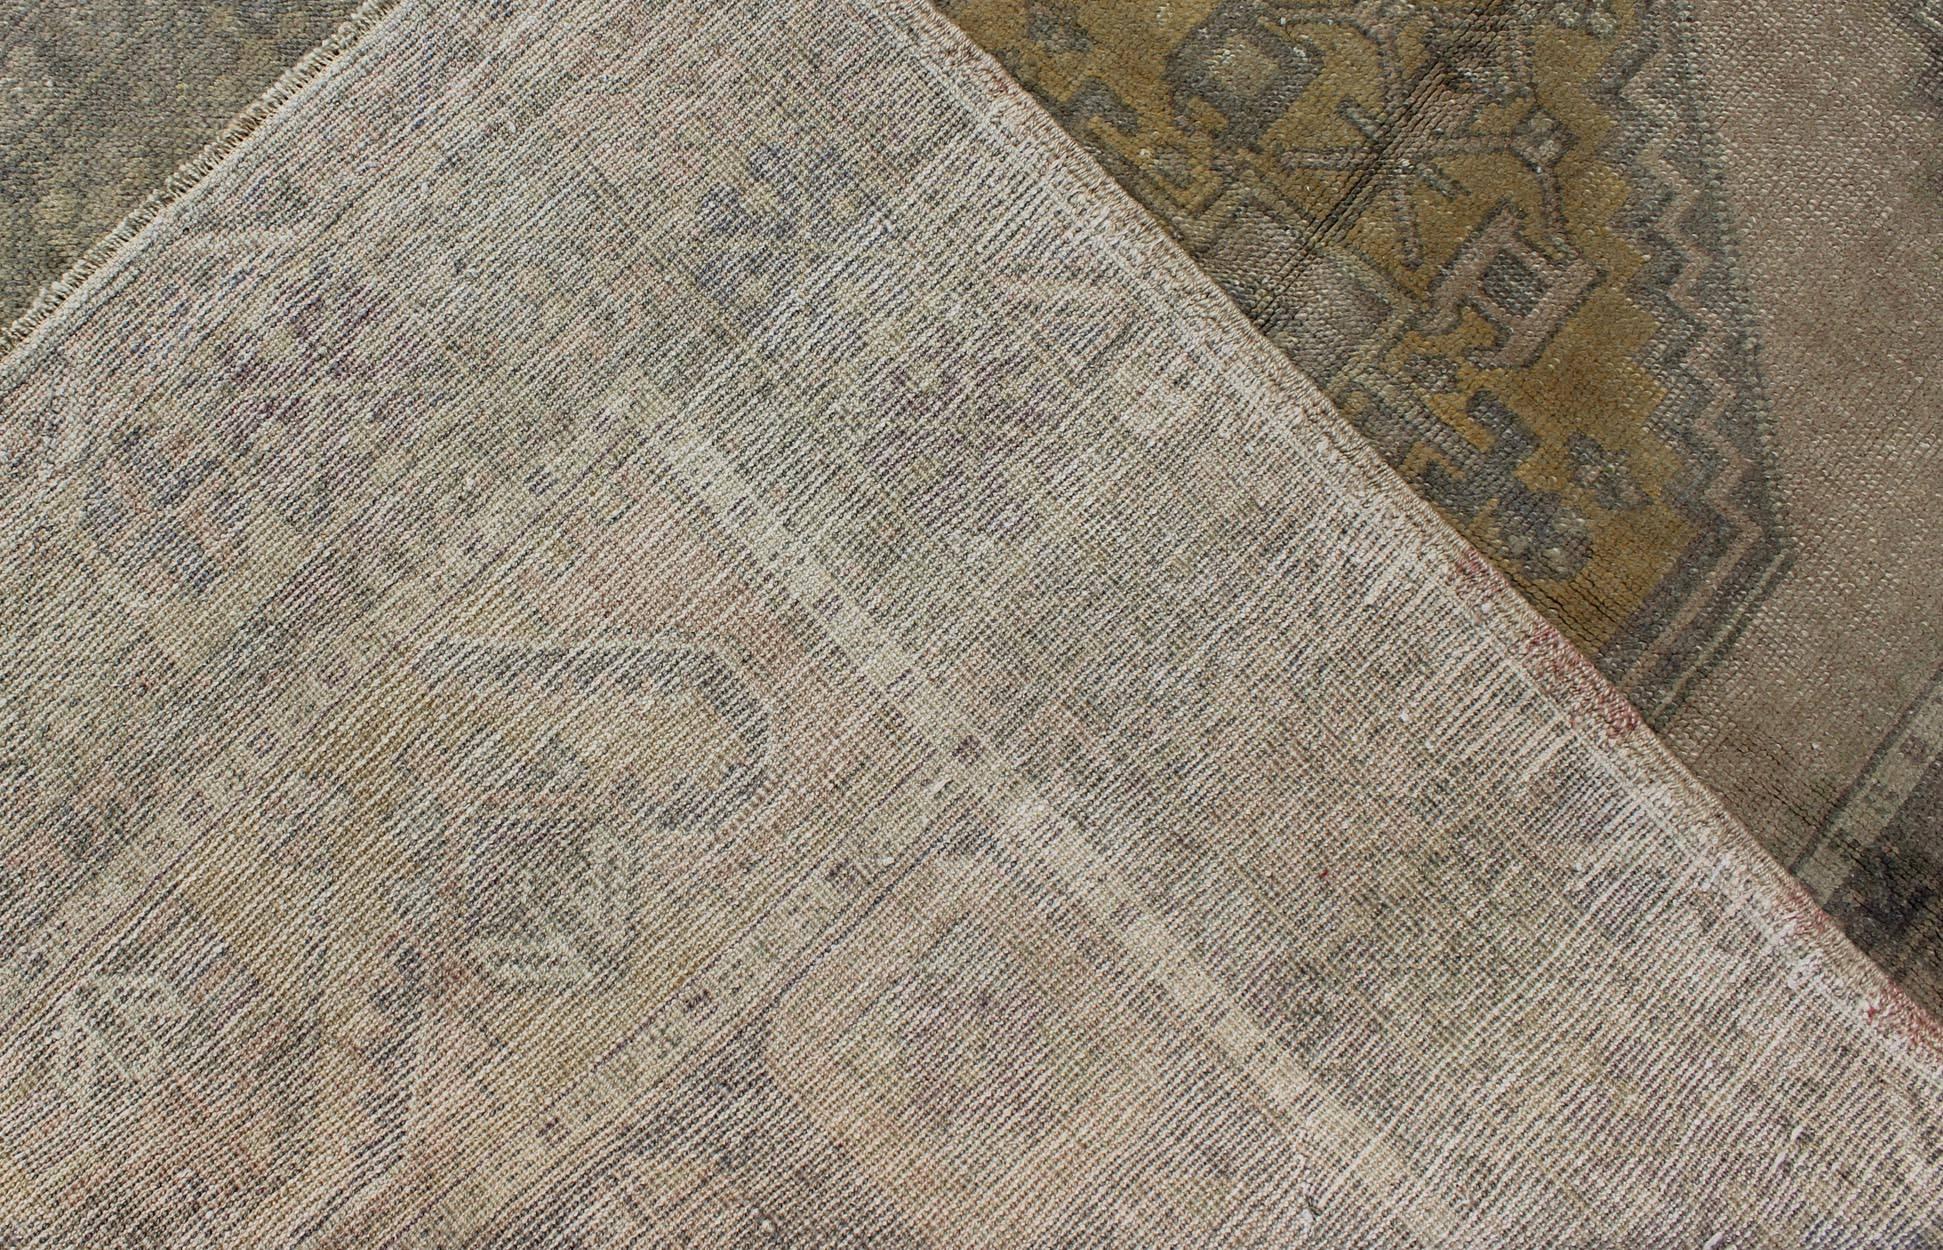 Wool Muted Mid-Century Turkish Oushak Rug with Tribal Geometric Medallion Design